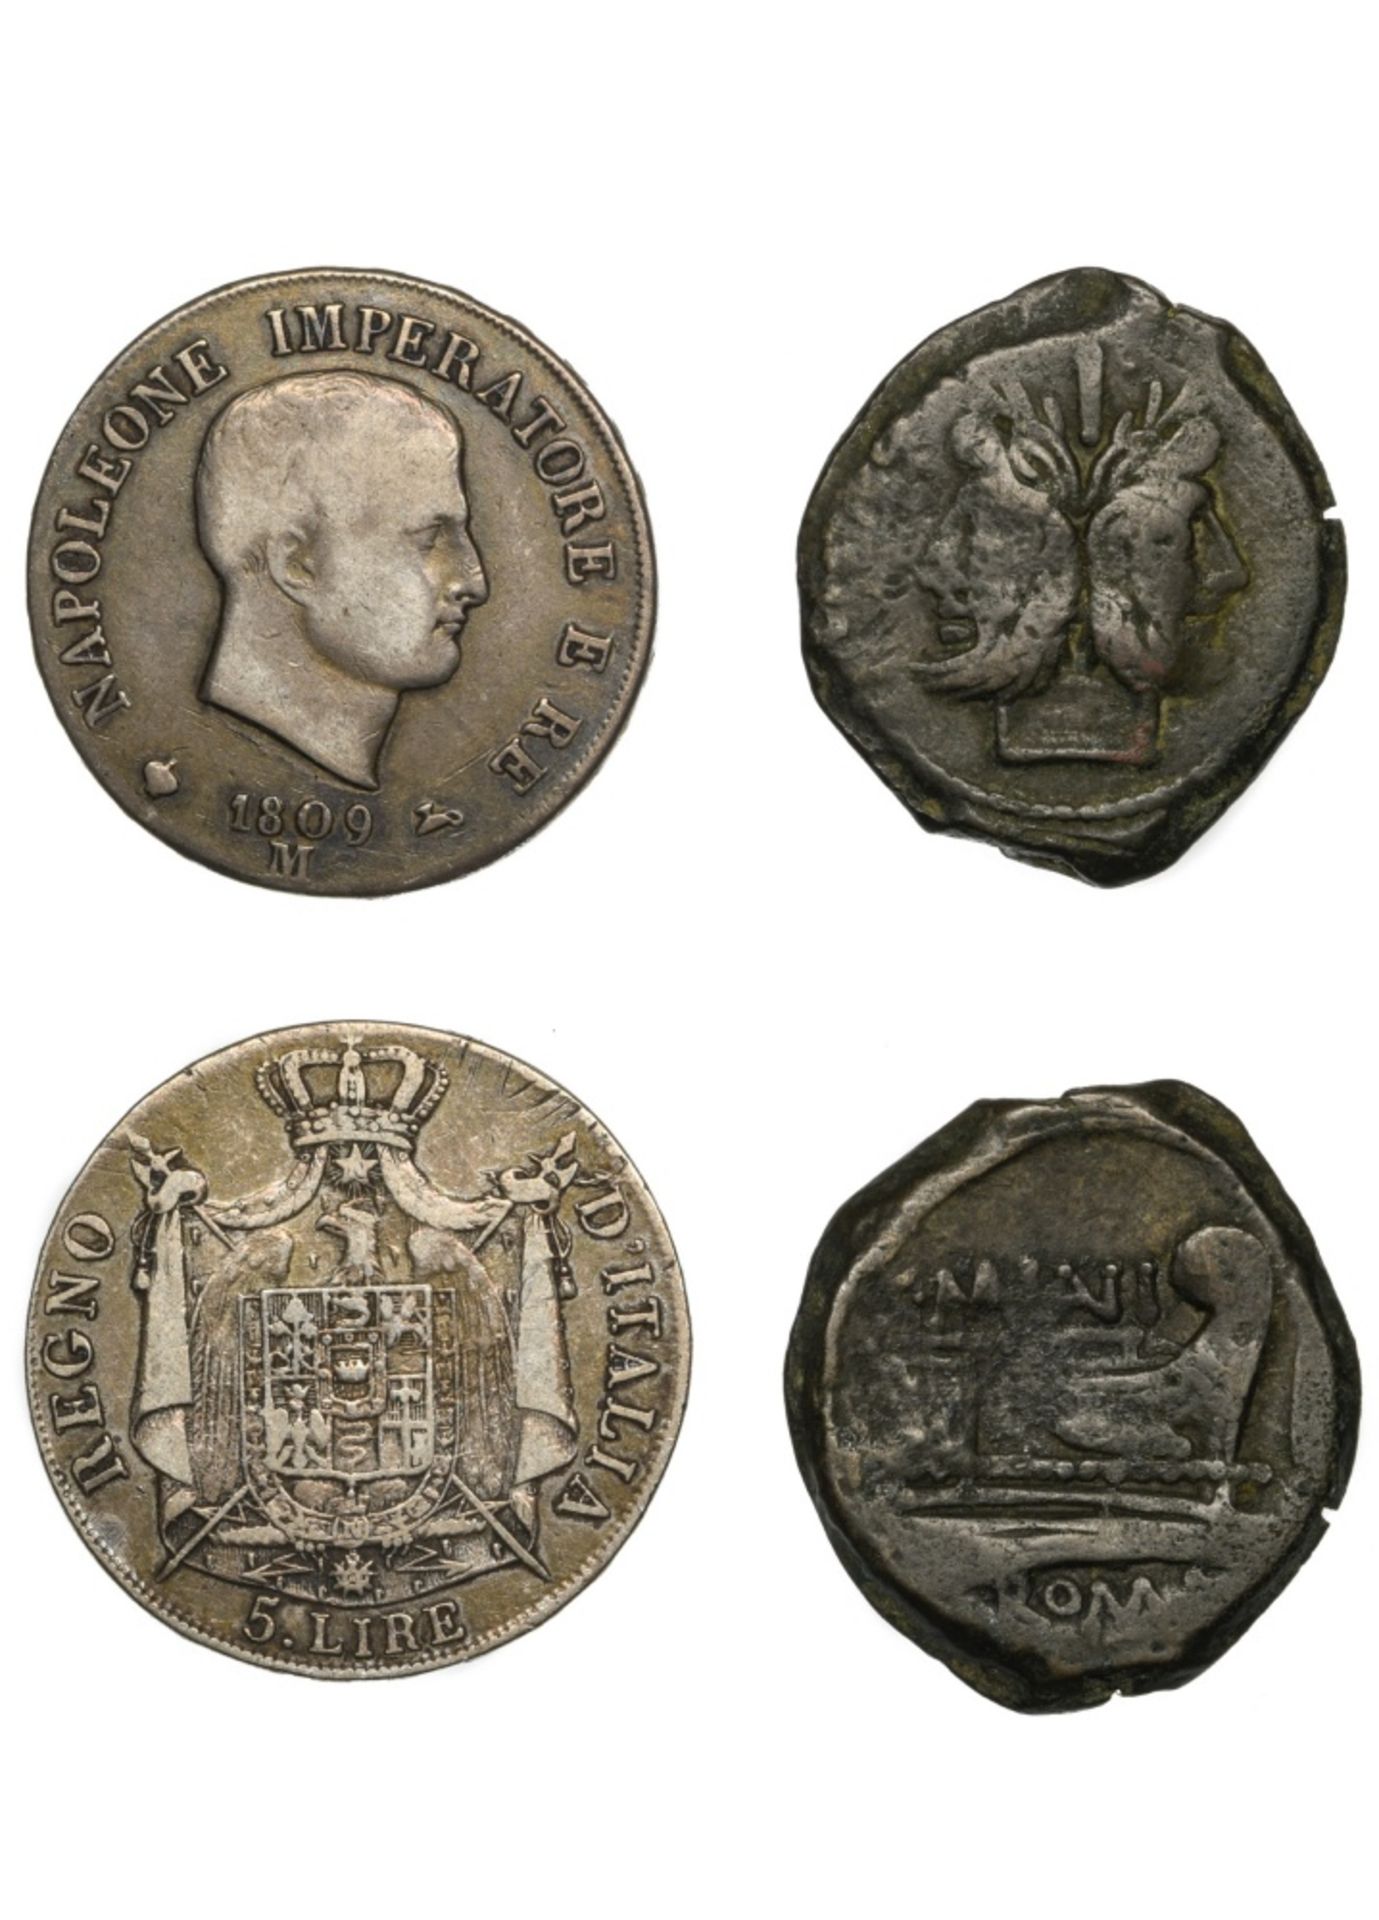 Italy, Kingdom of Napoleon Napoleon I (1805-1814), 5 Lire, 24.73g, 1809 M, Milan, raised edge (Gig.